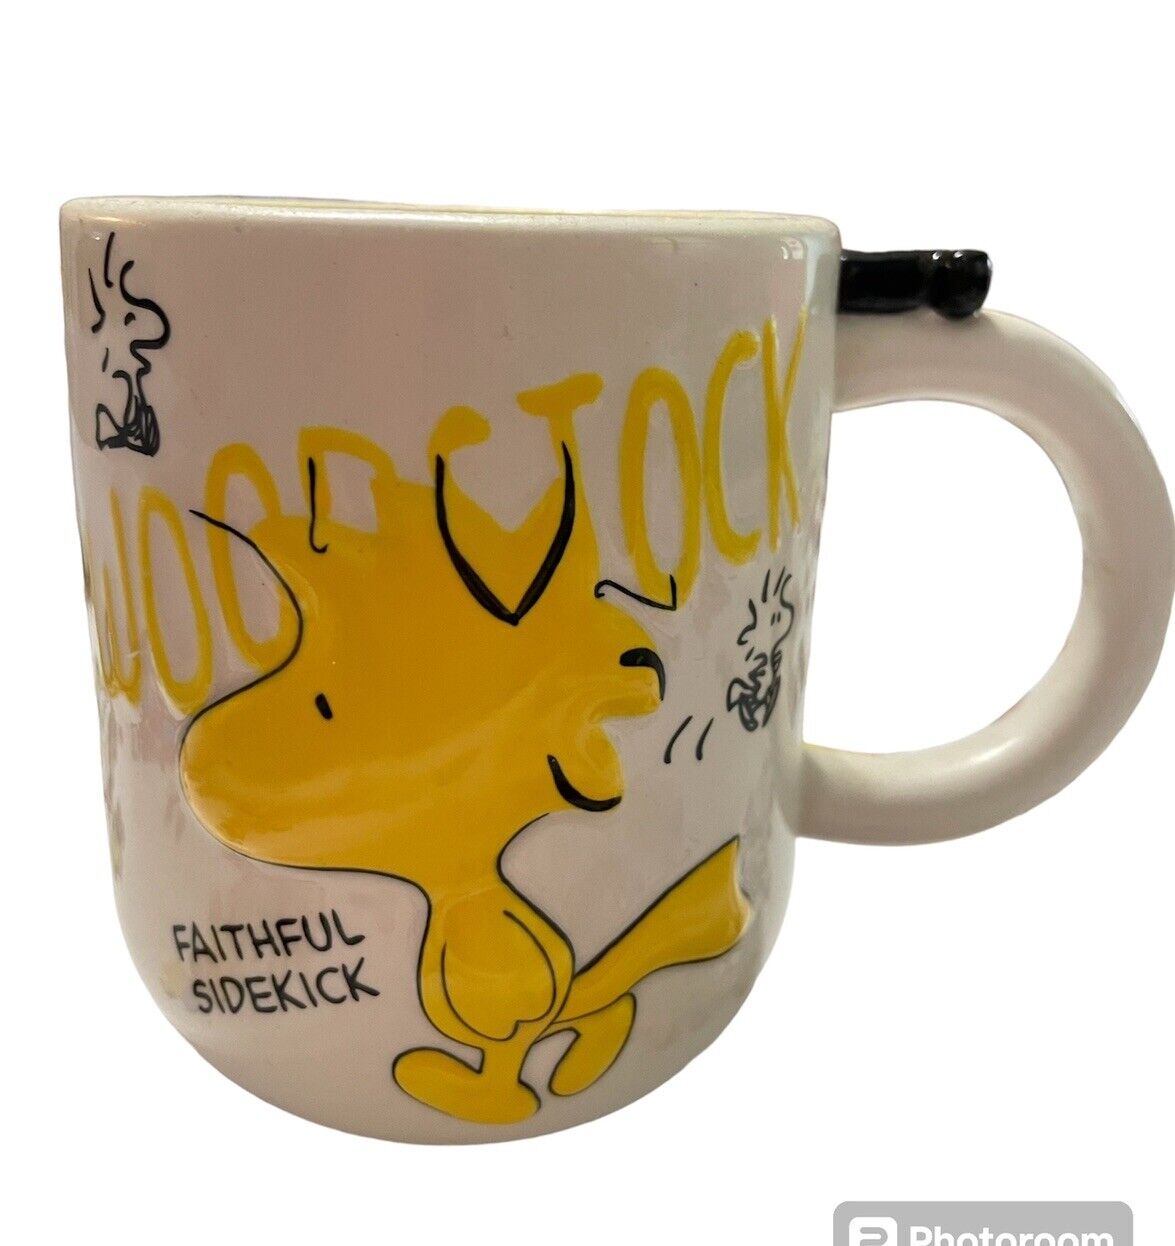 Westland Peanuts Woodstock Faithful Sidekick Ceramic Mug 4-1/4” 18232 EUC